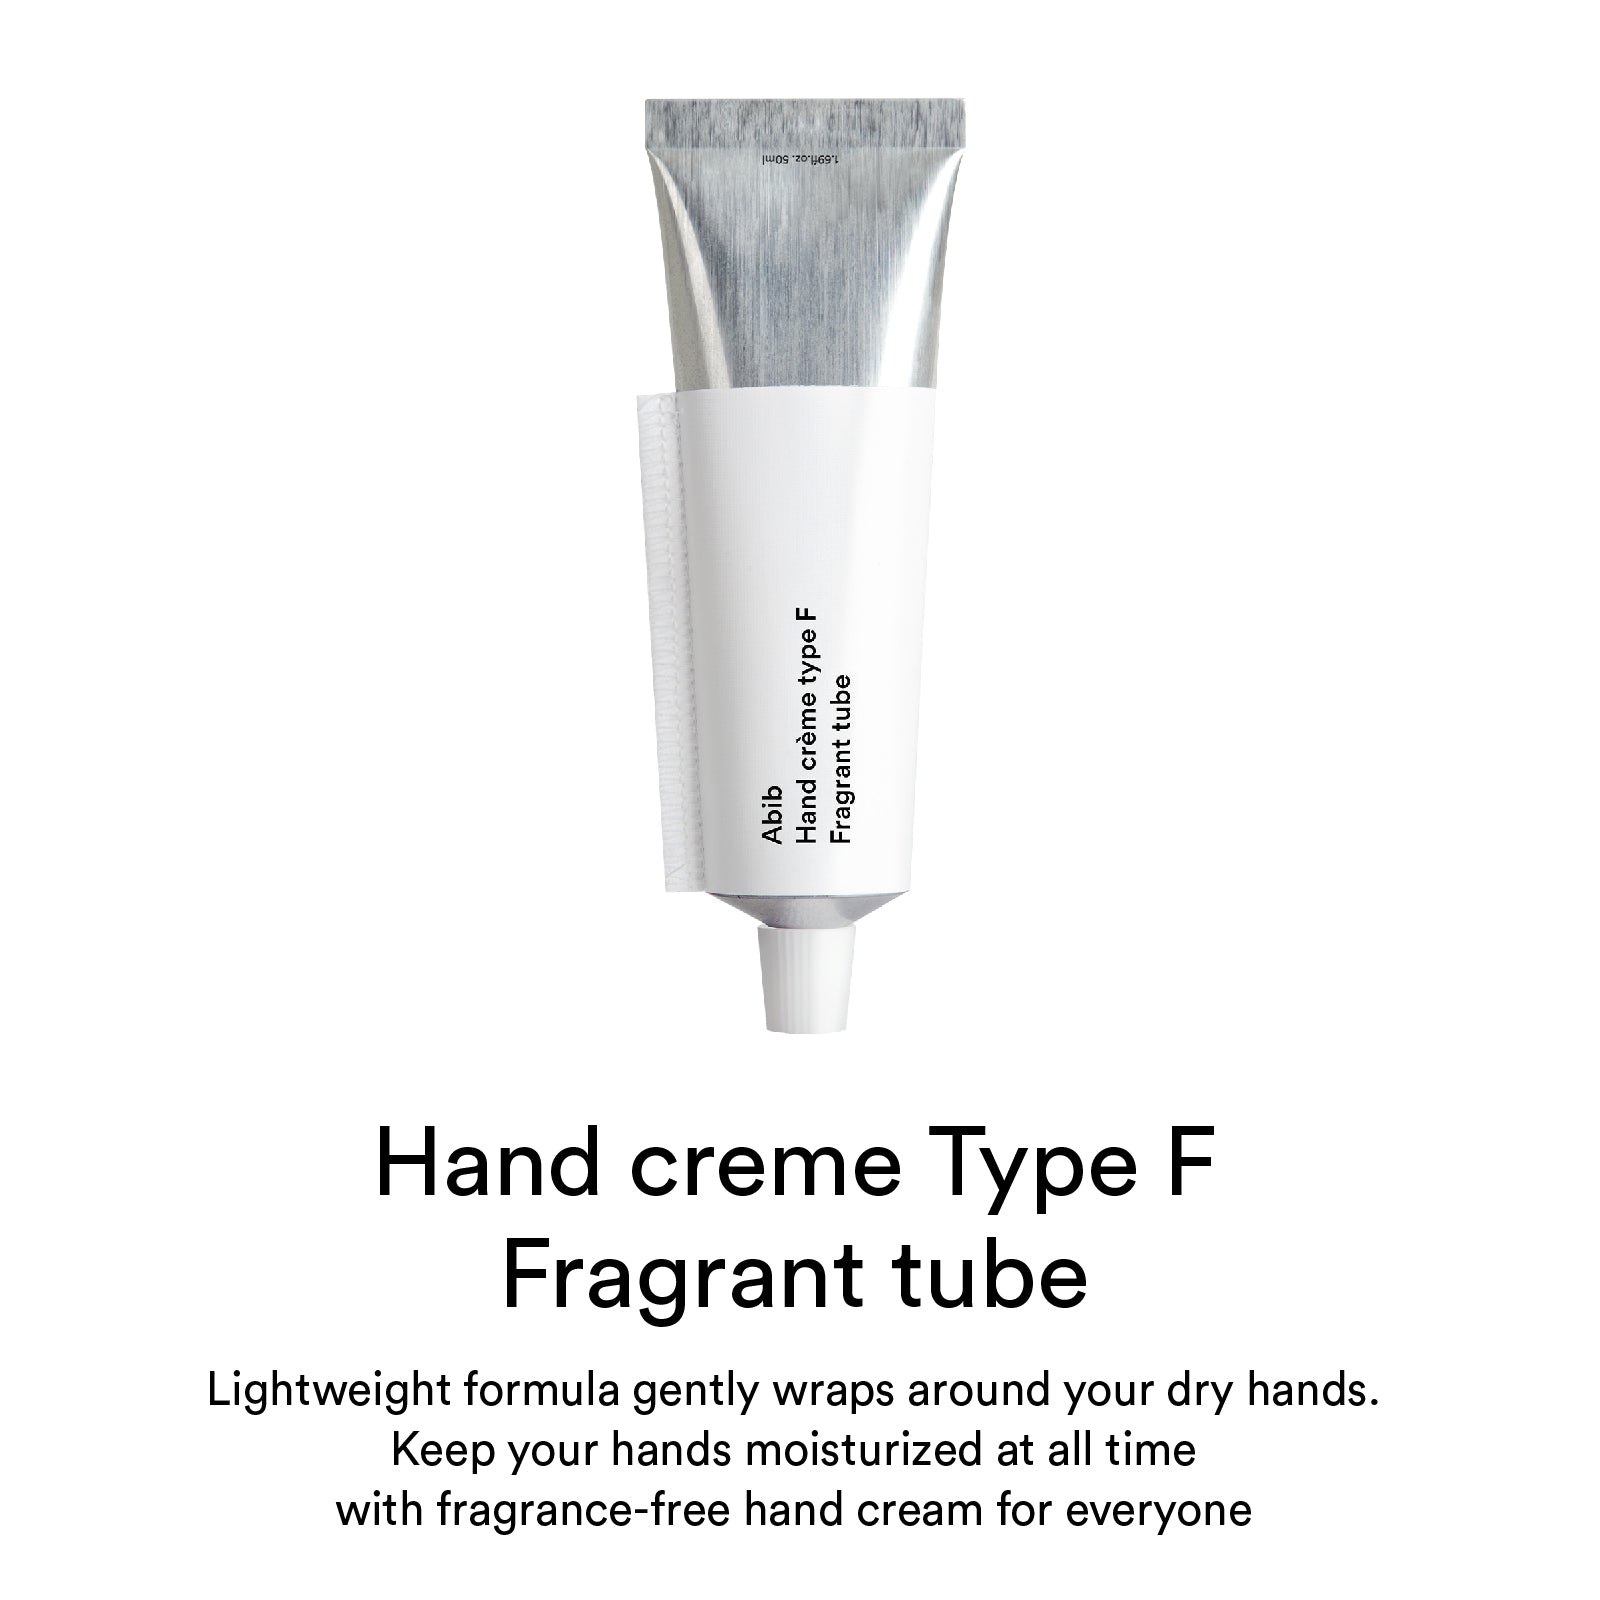 Fragrant tube